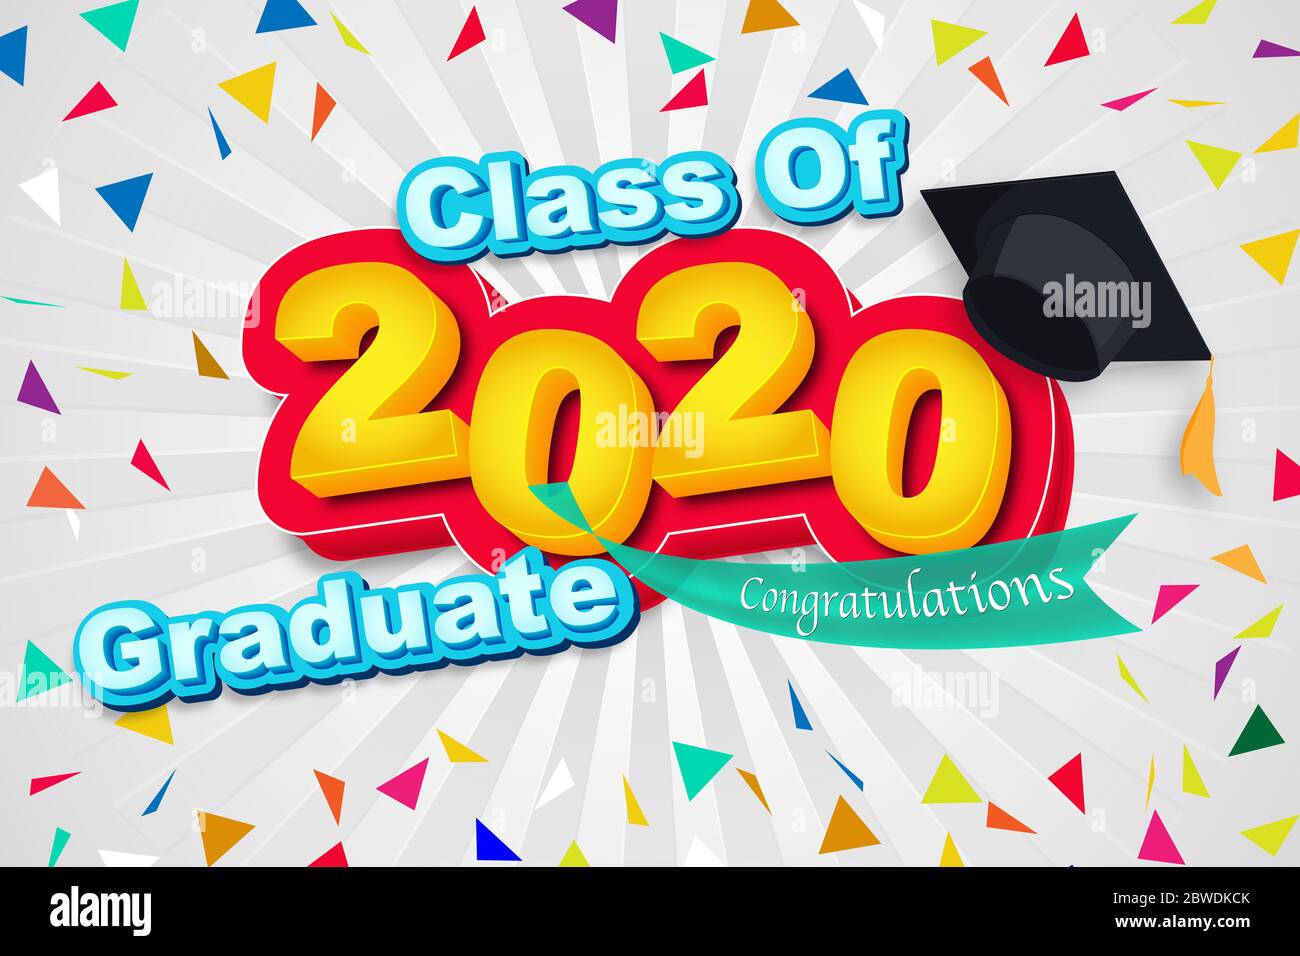 Class of 2020 Text Design  with graduation cap. Stock Photo